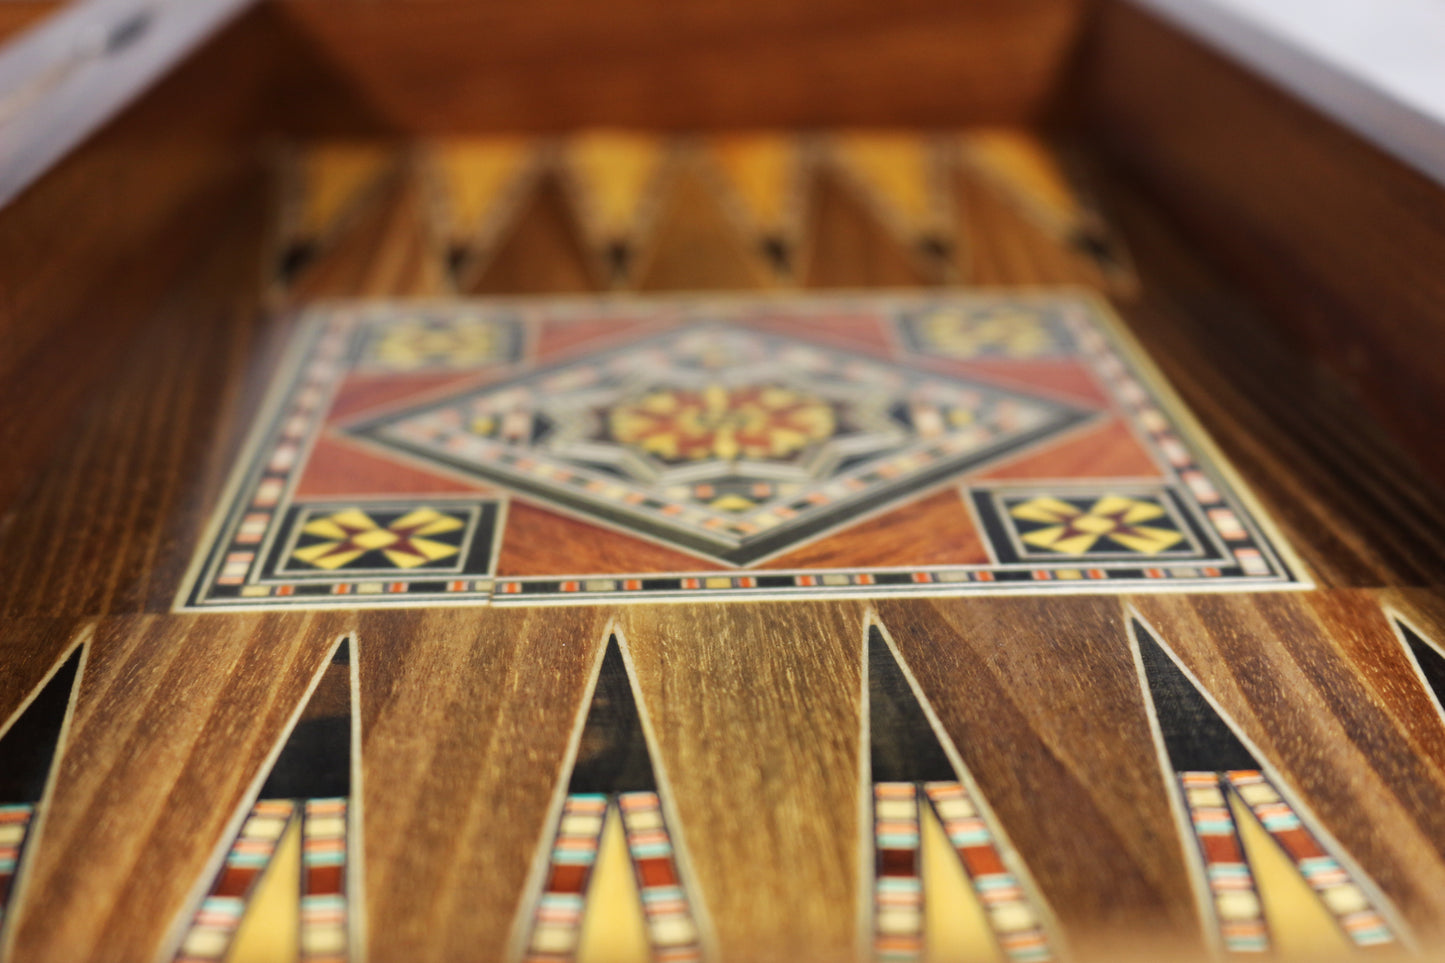 Neu 40 x 40 cm Holz Backgammon/Schachspiel/Dama Brett  EK 6-1-40 (Elessar) mit 30 Holz Backgammon Steine